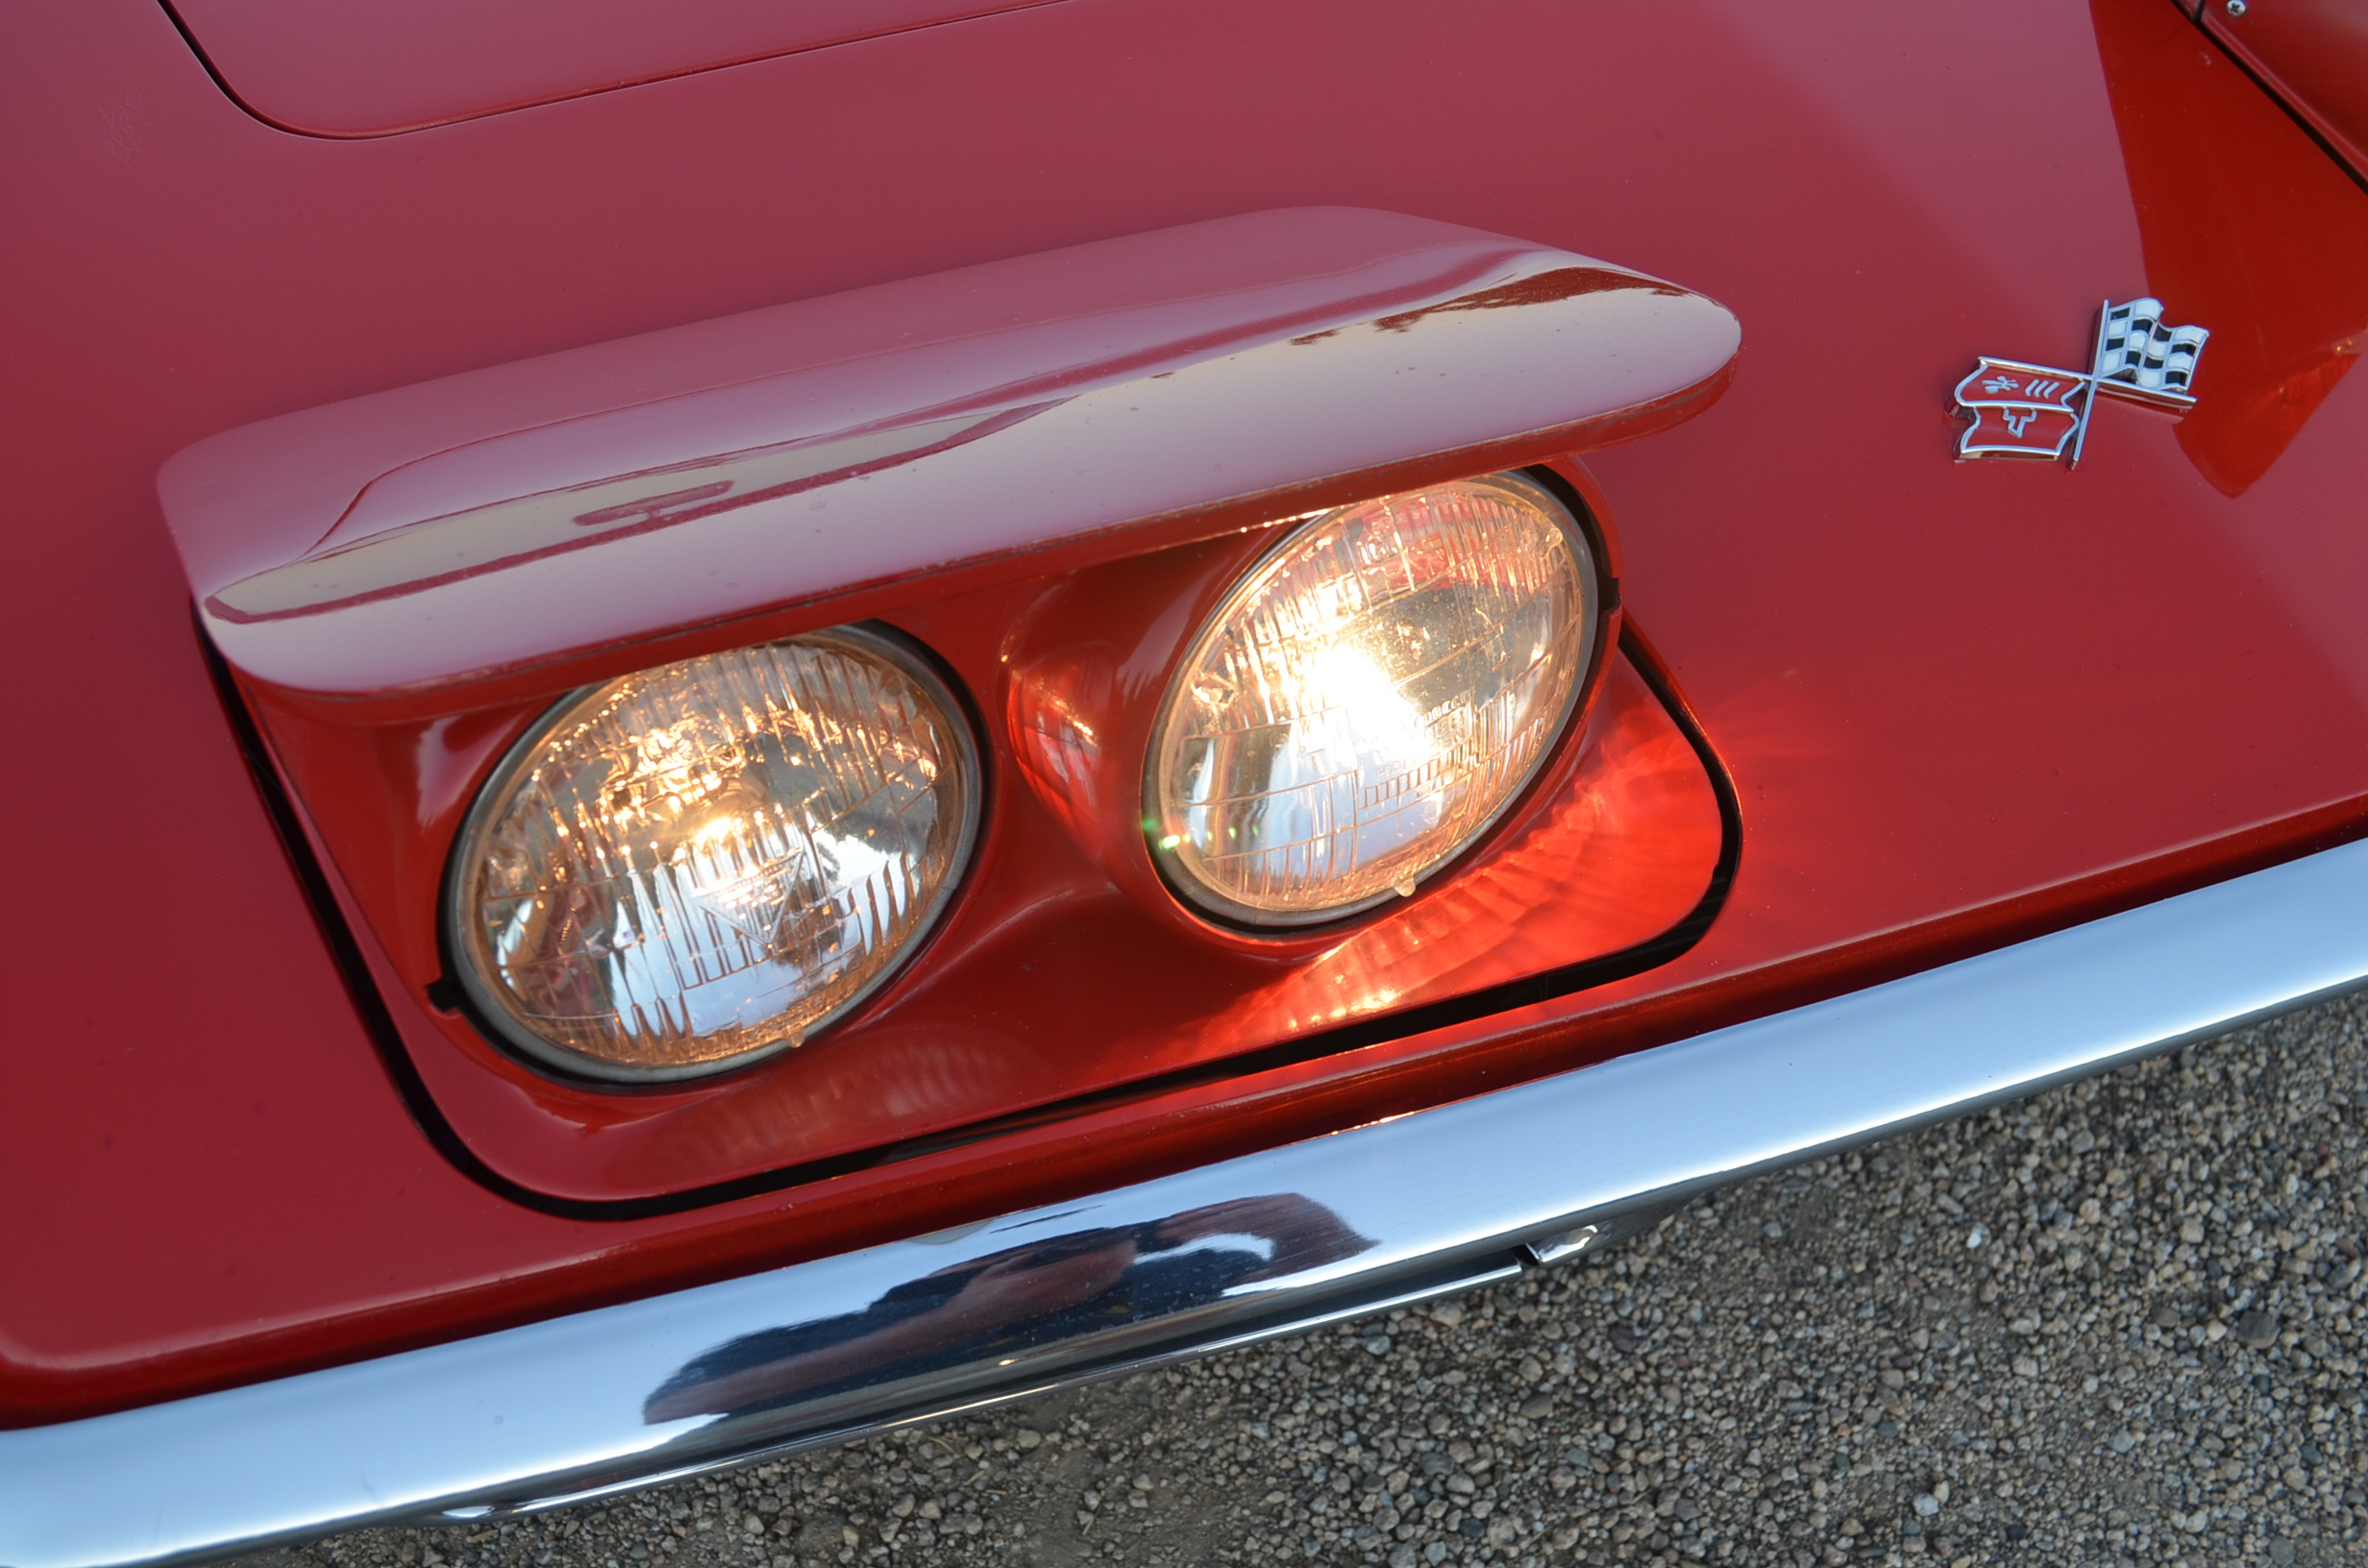 Red Chevrolet Corvette headlight classic car